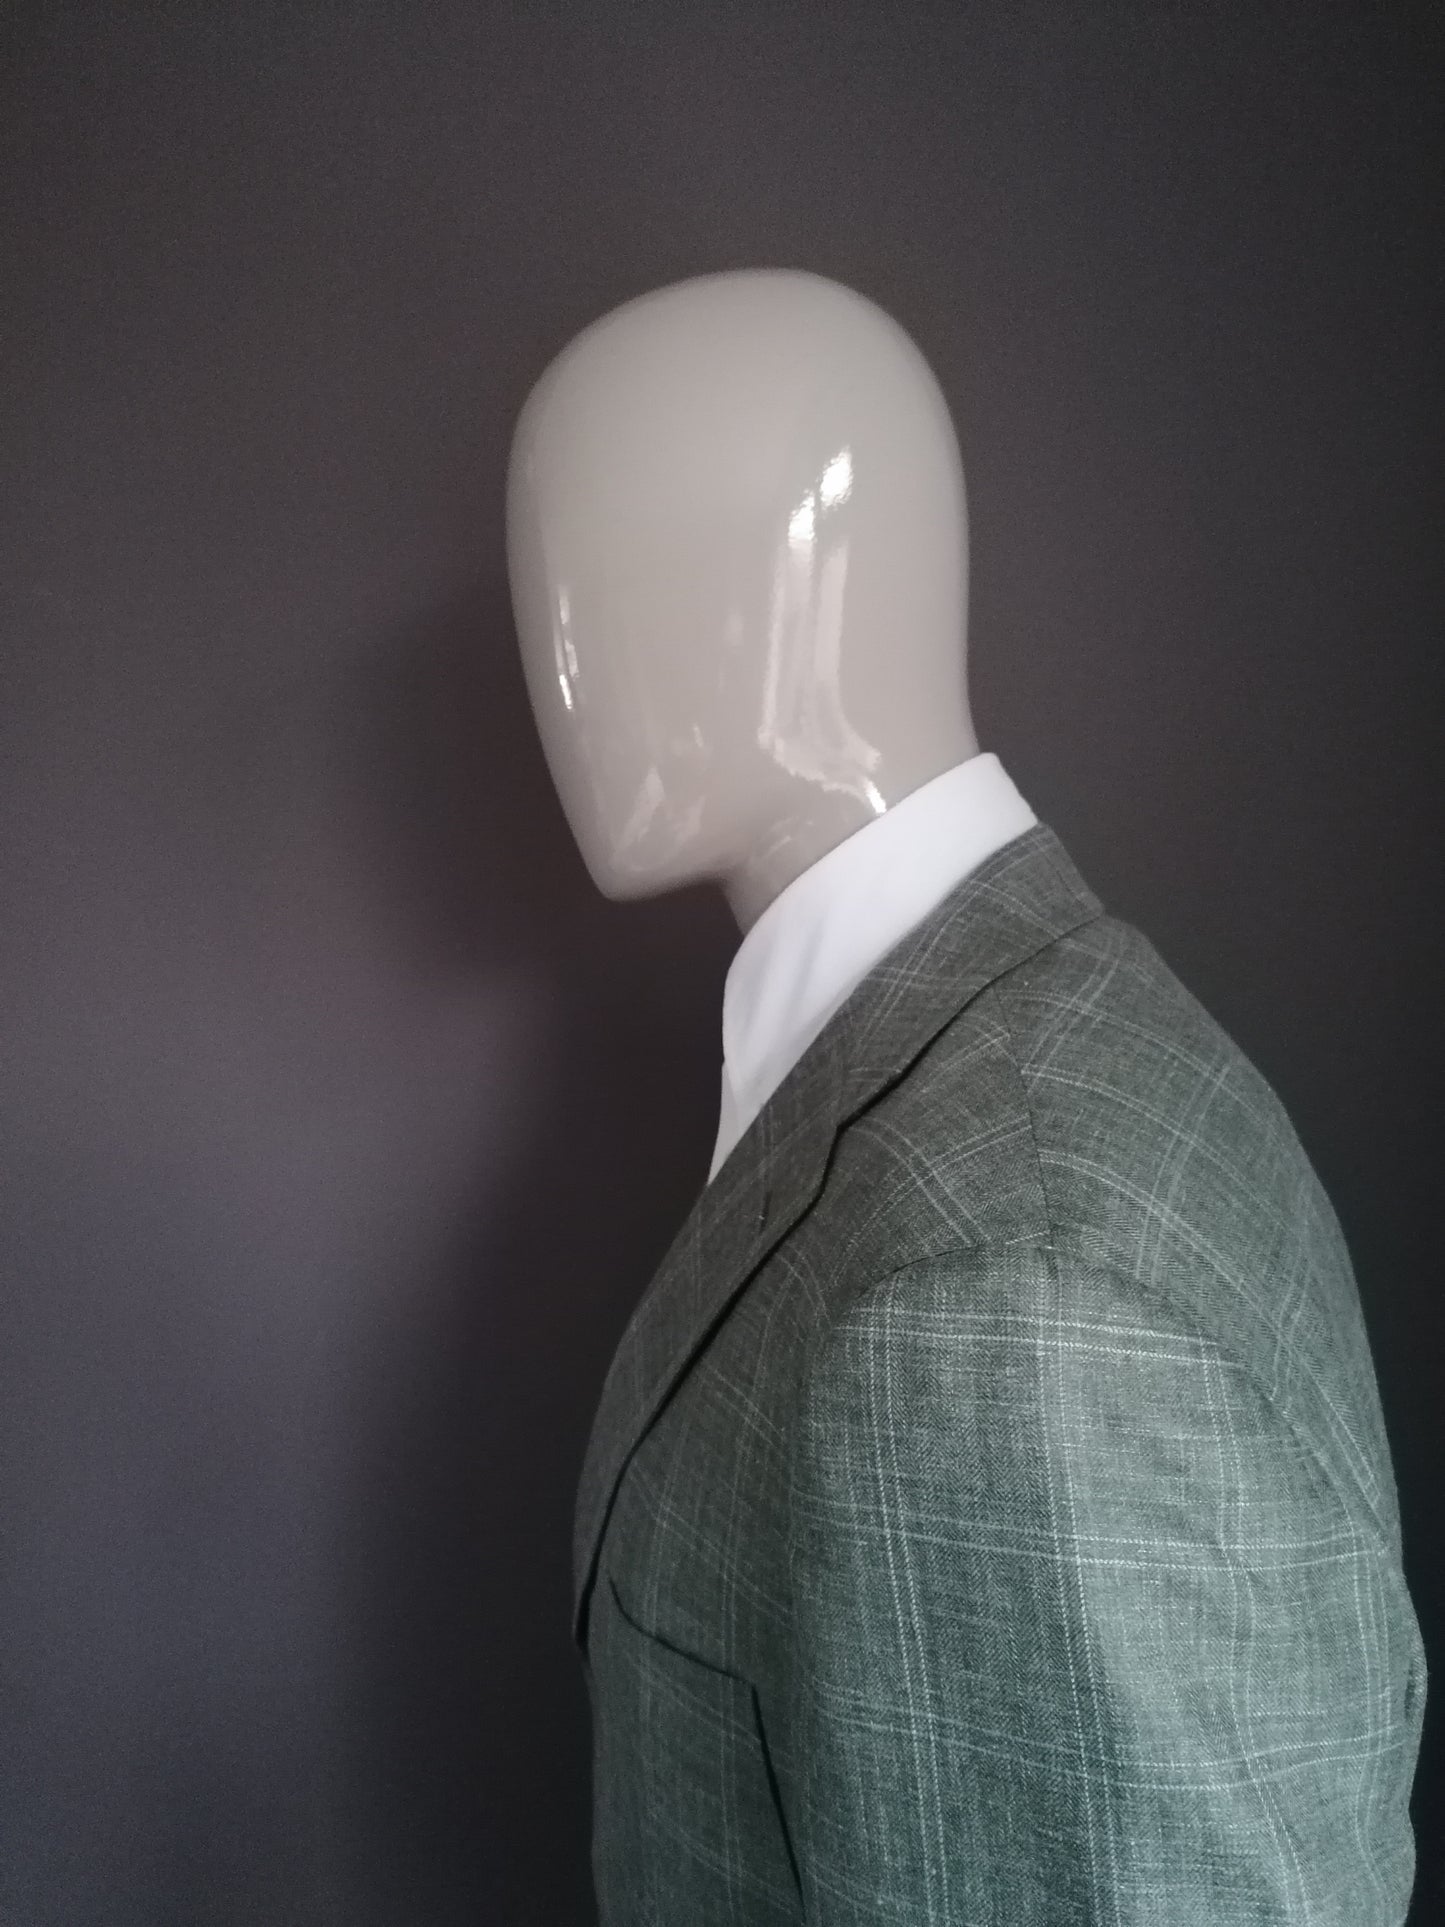 Franck Namani woolen and linen jacket. Green white checkered. Size 56 / XL